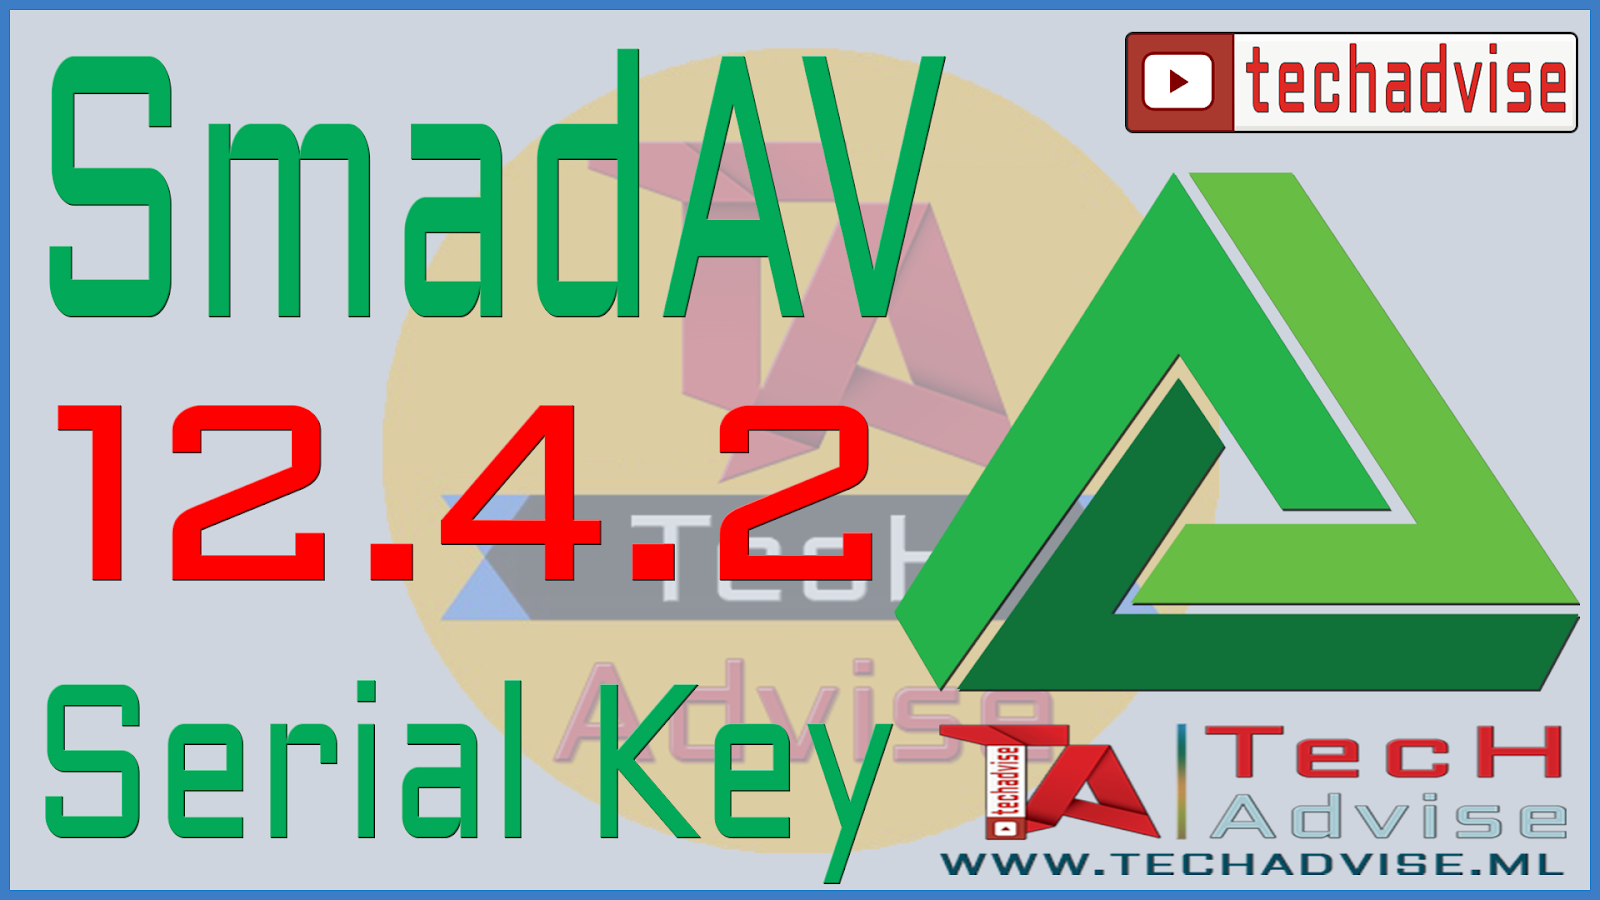 Smadav Antivirus 2018 Rev 12 4 2 Serial Key Crack Full Pro Version Free Download Test Themes